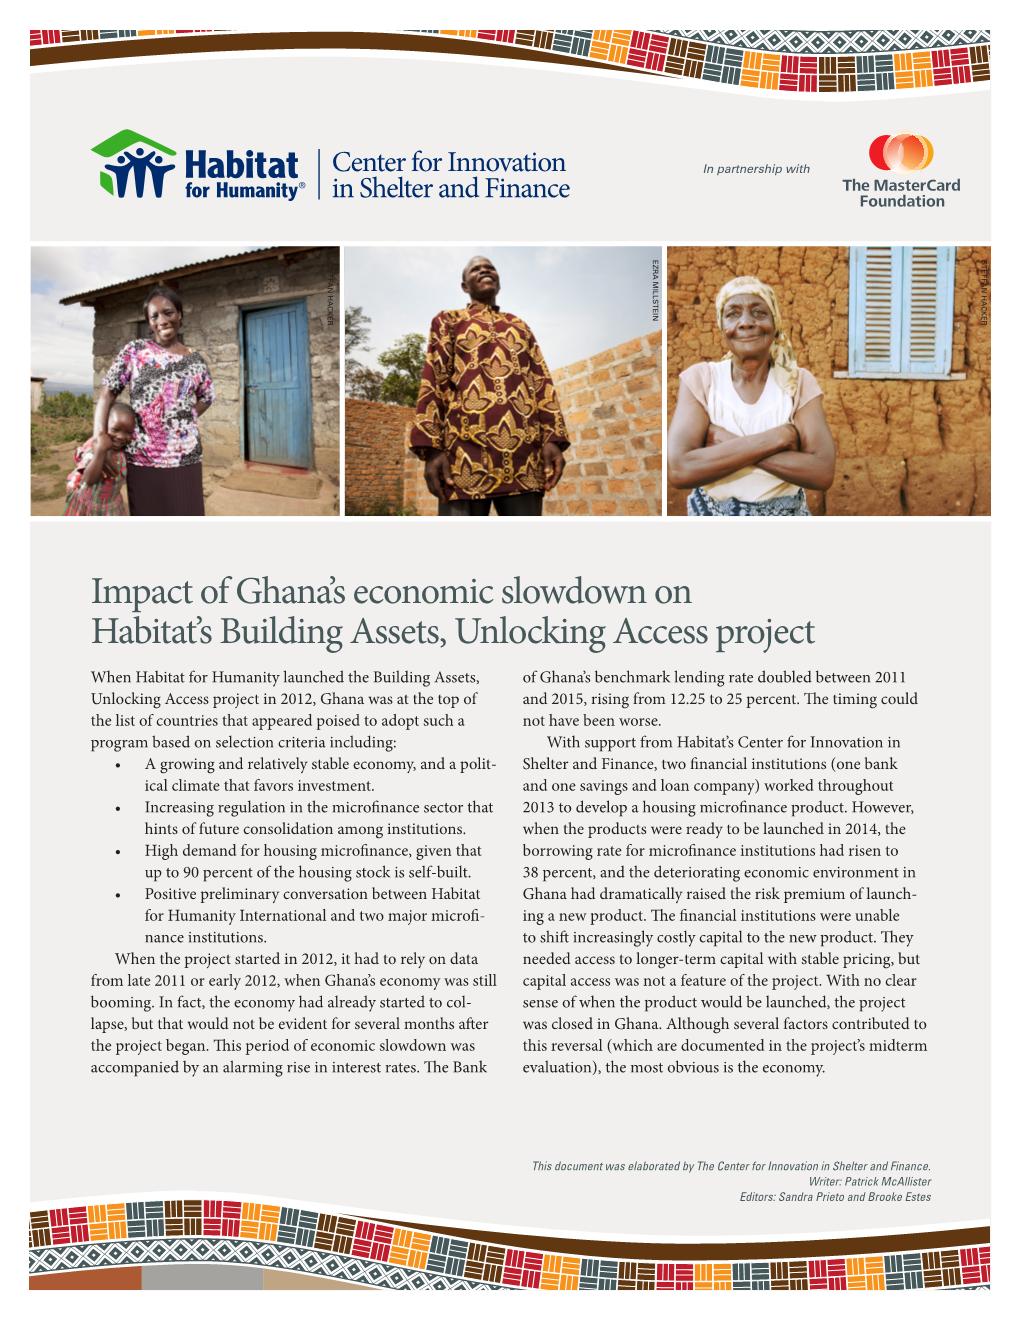 Impact of Ghana's Economic Slowdown on Habitat's Building Assets, Unlocking Access Project